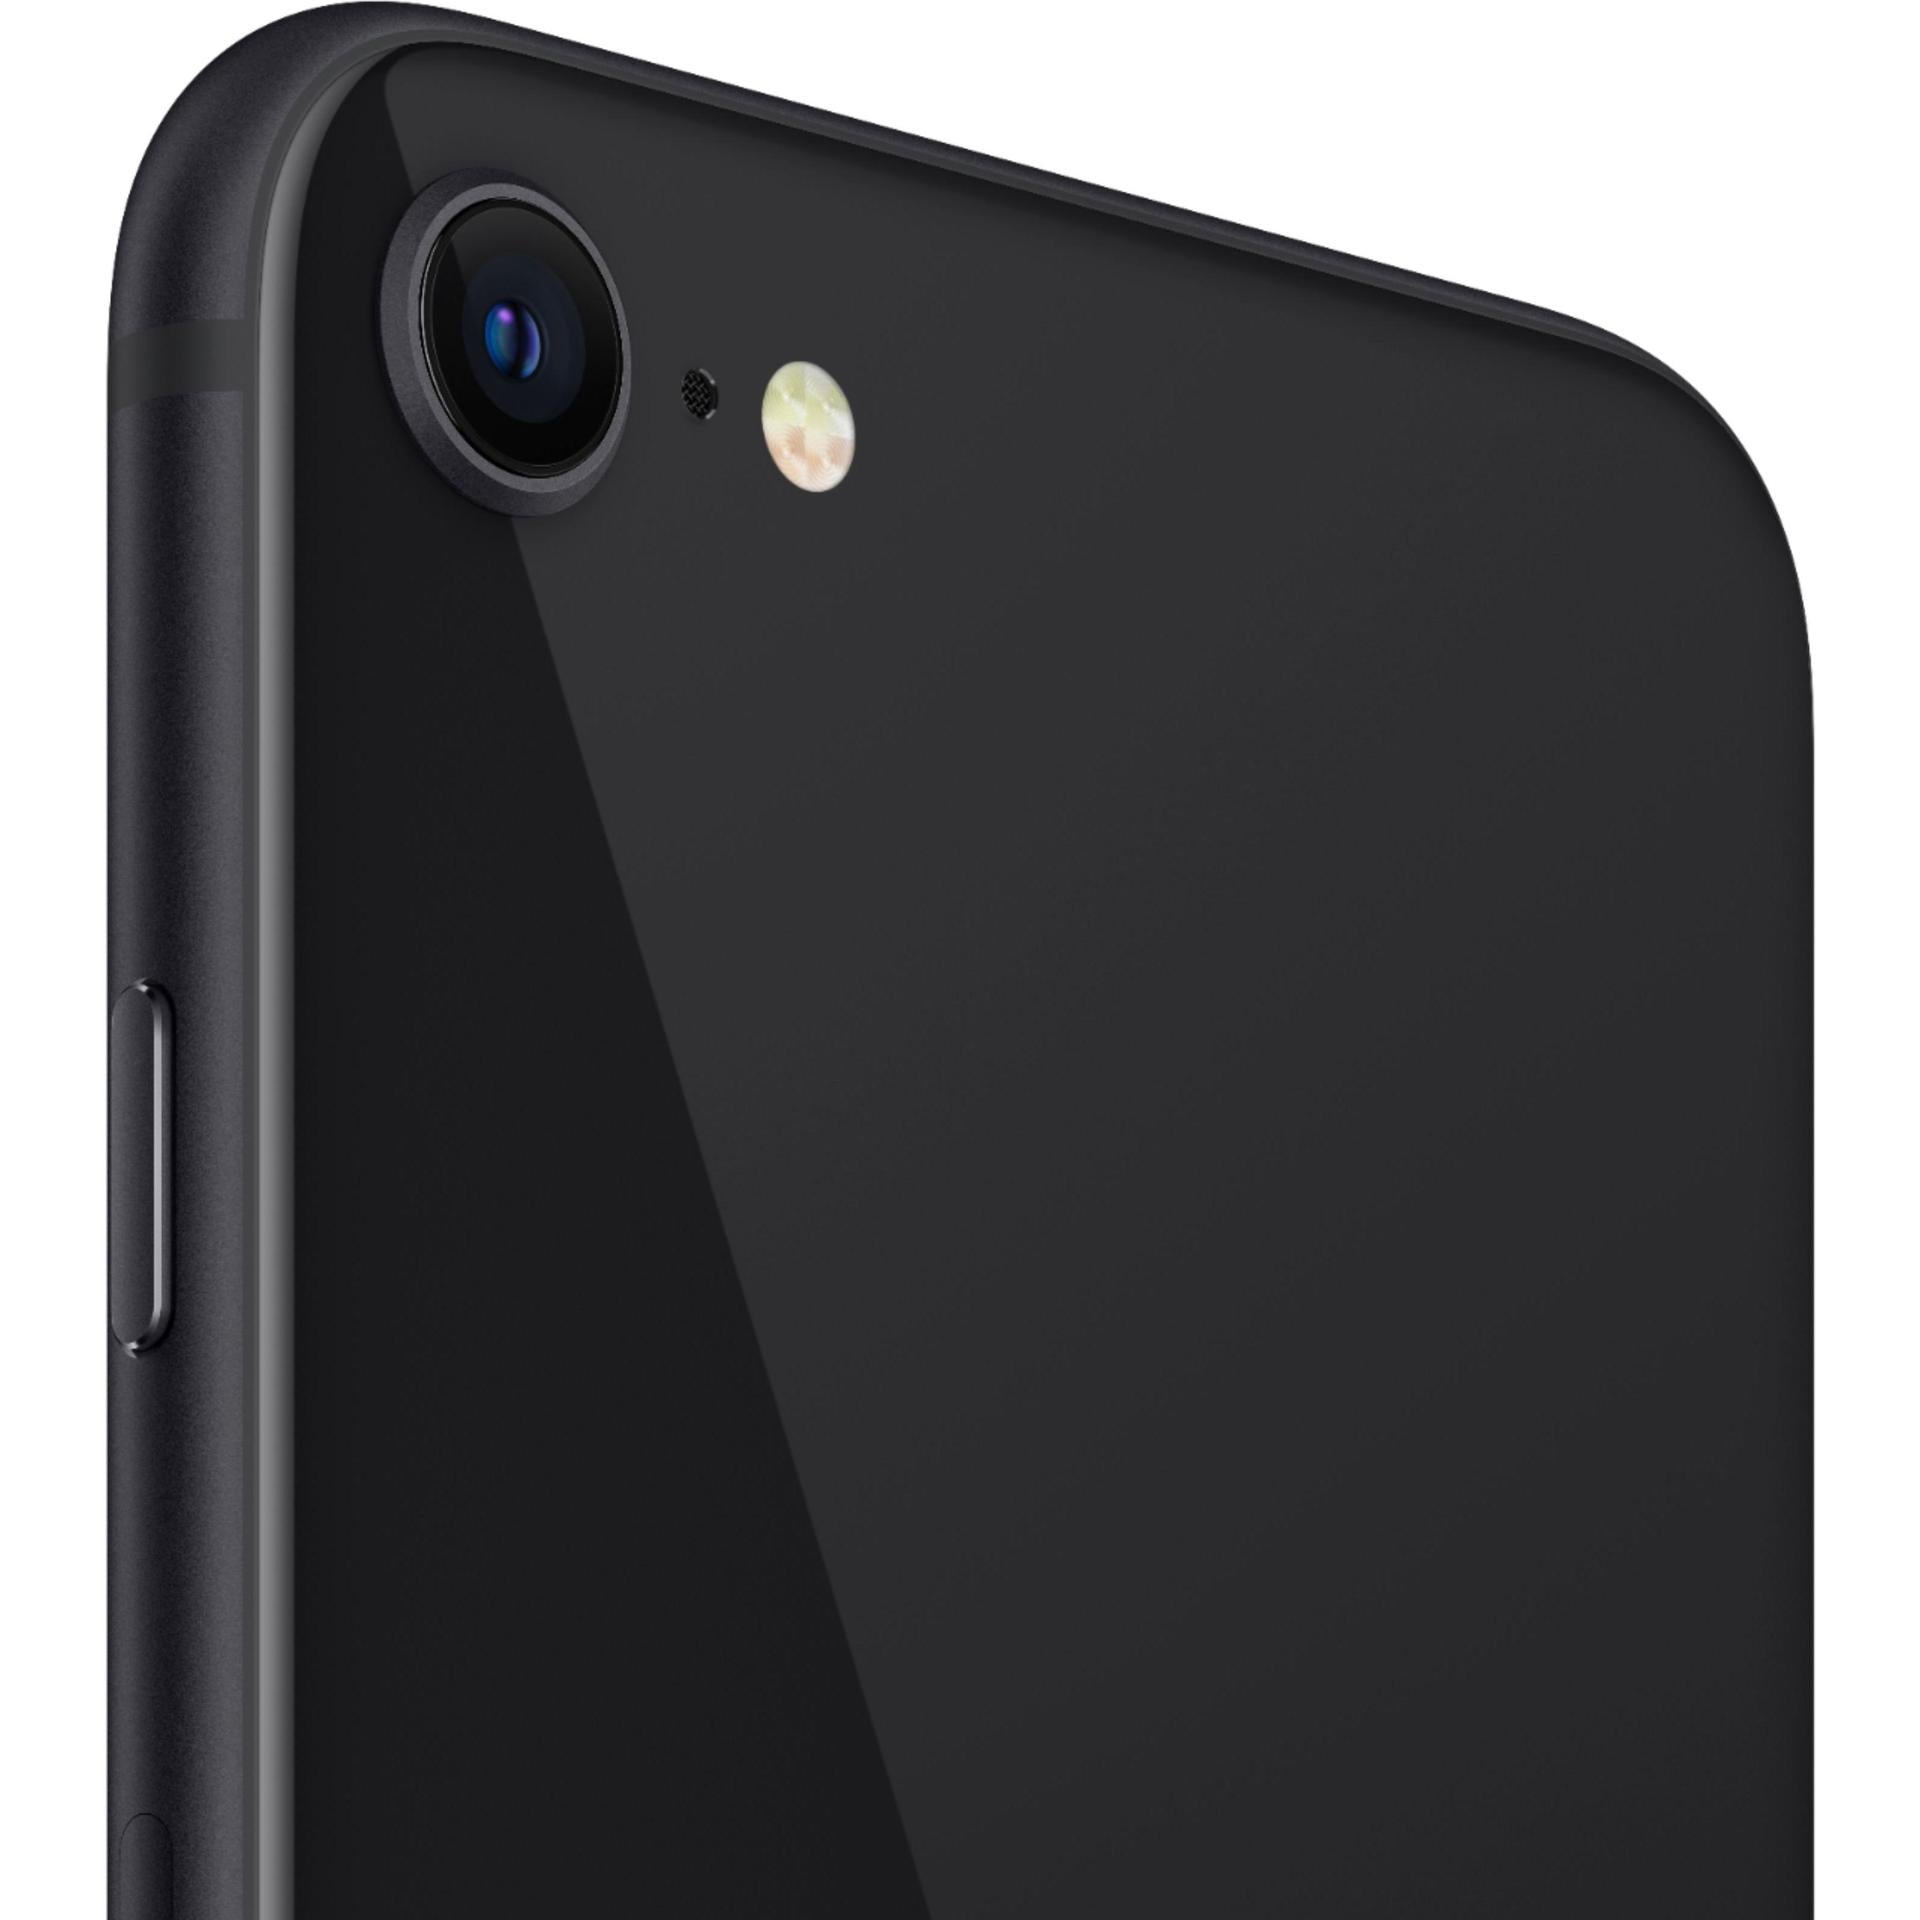 Apple iPhone SE 2020 64GB Black Unlocked - Fair Condition